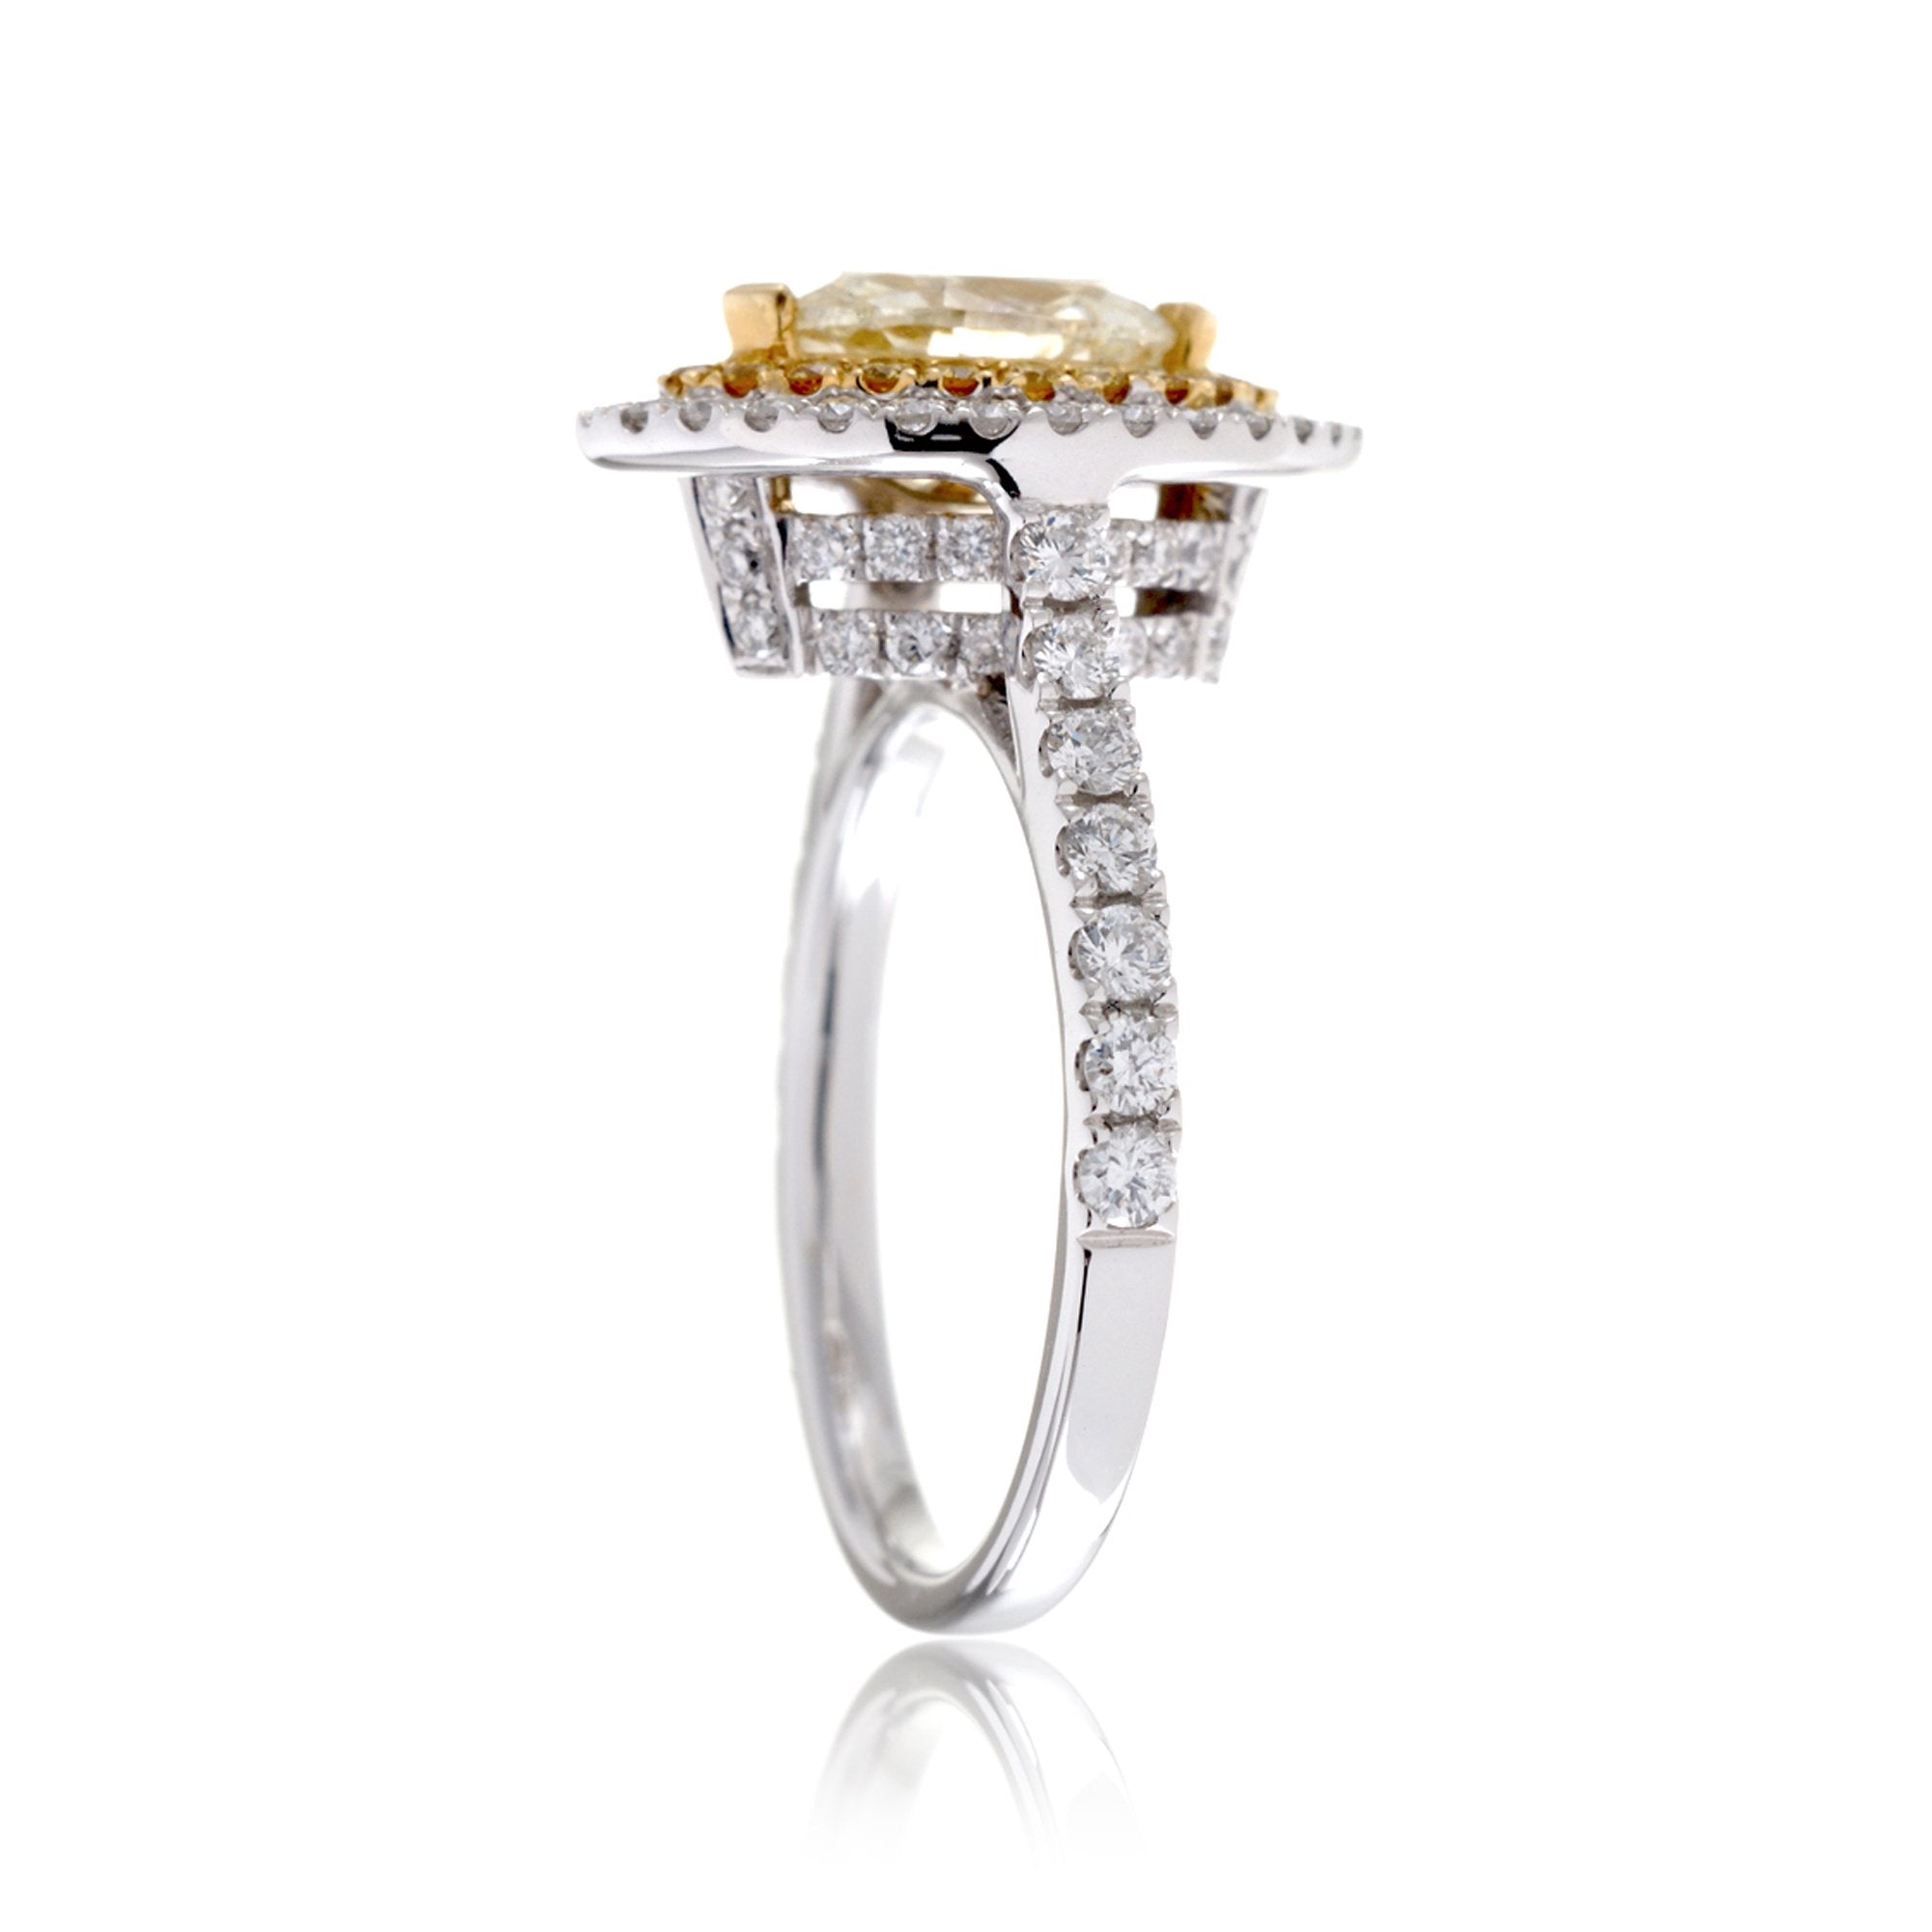 Marquise diamond double halo engagement ring